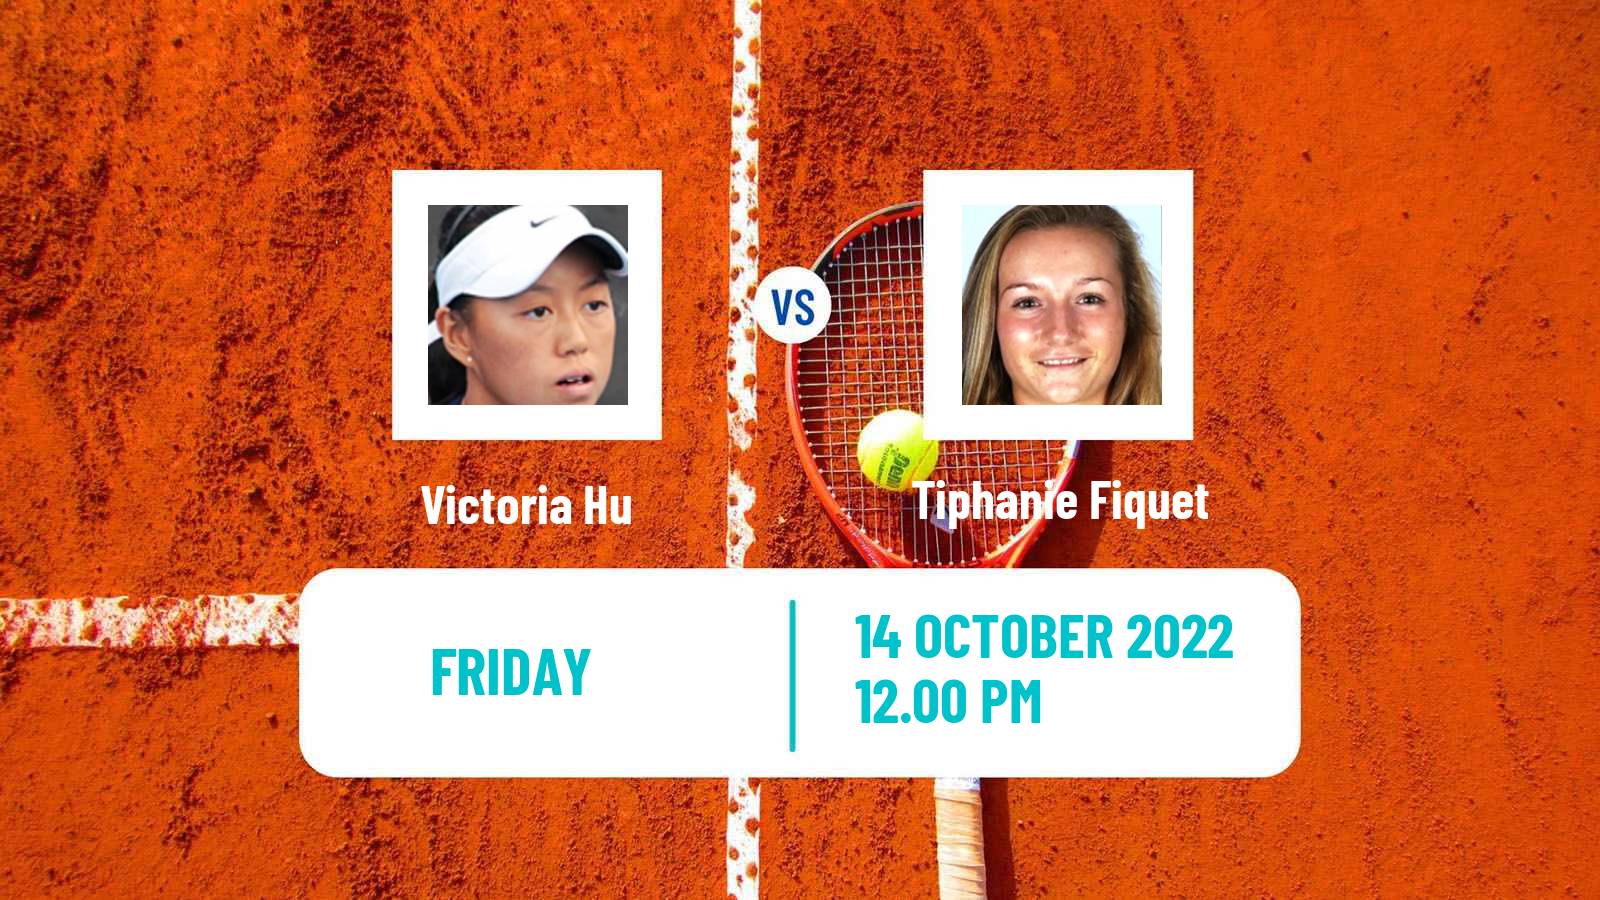 Tennis ITF Tournaments Victoria Hu - Tiphanie Fiquet